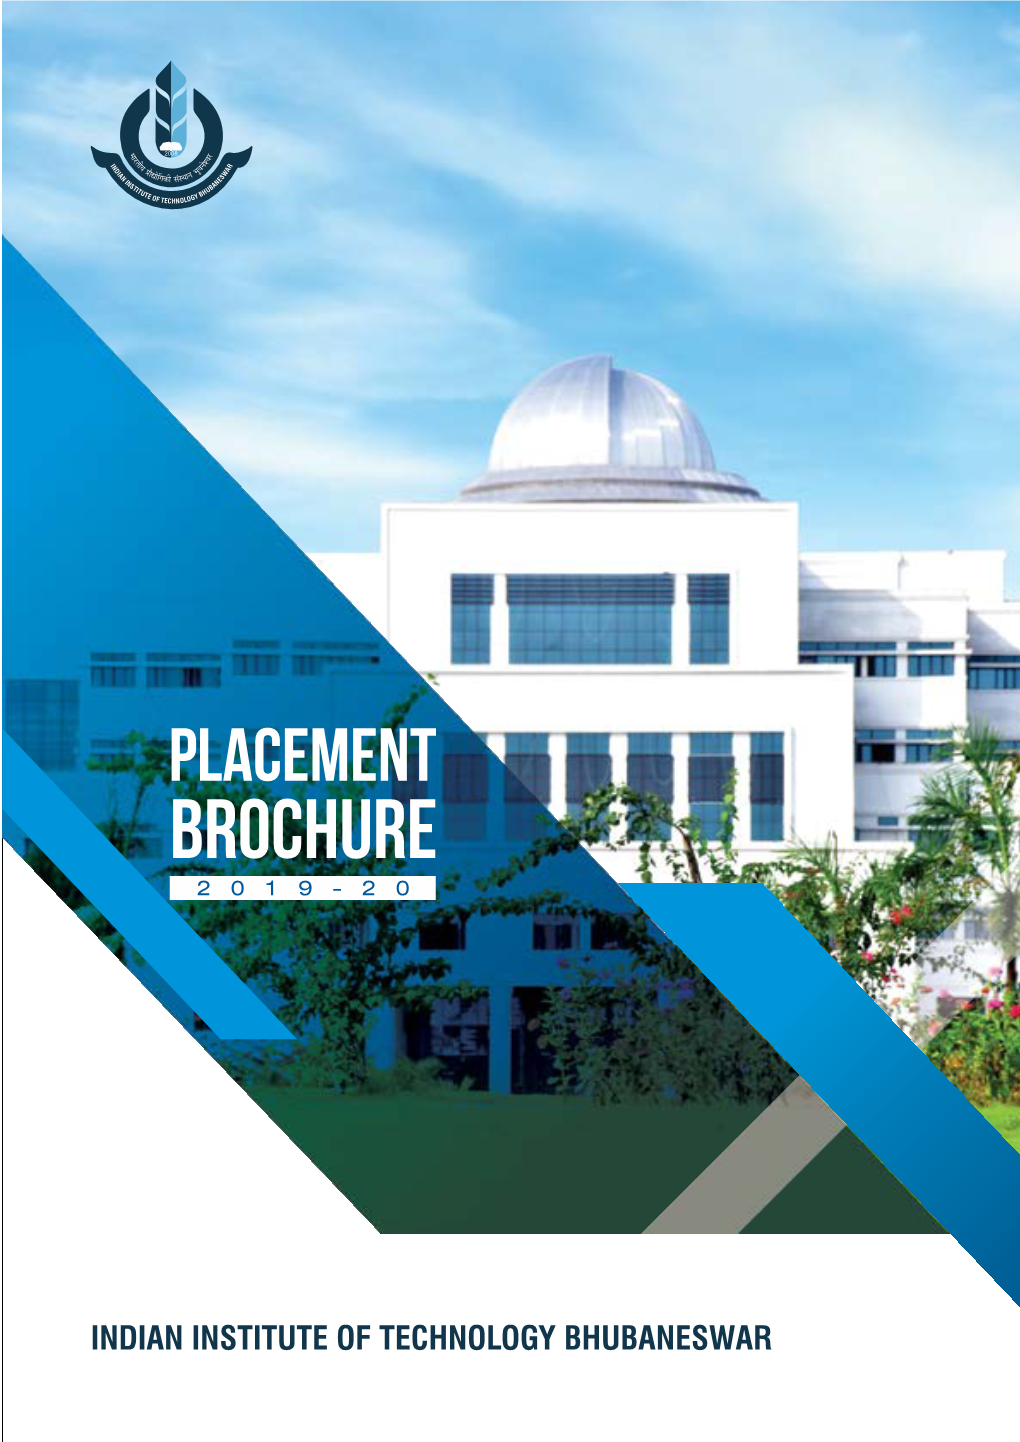 Placement Brochure 2 0 1 9 - 2 0